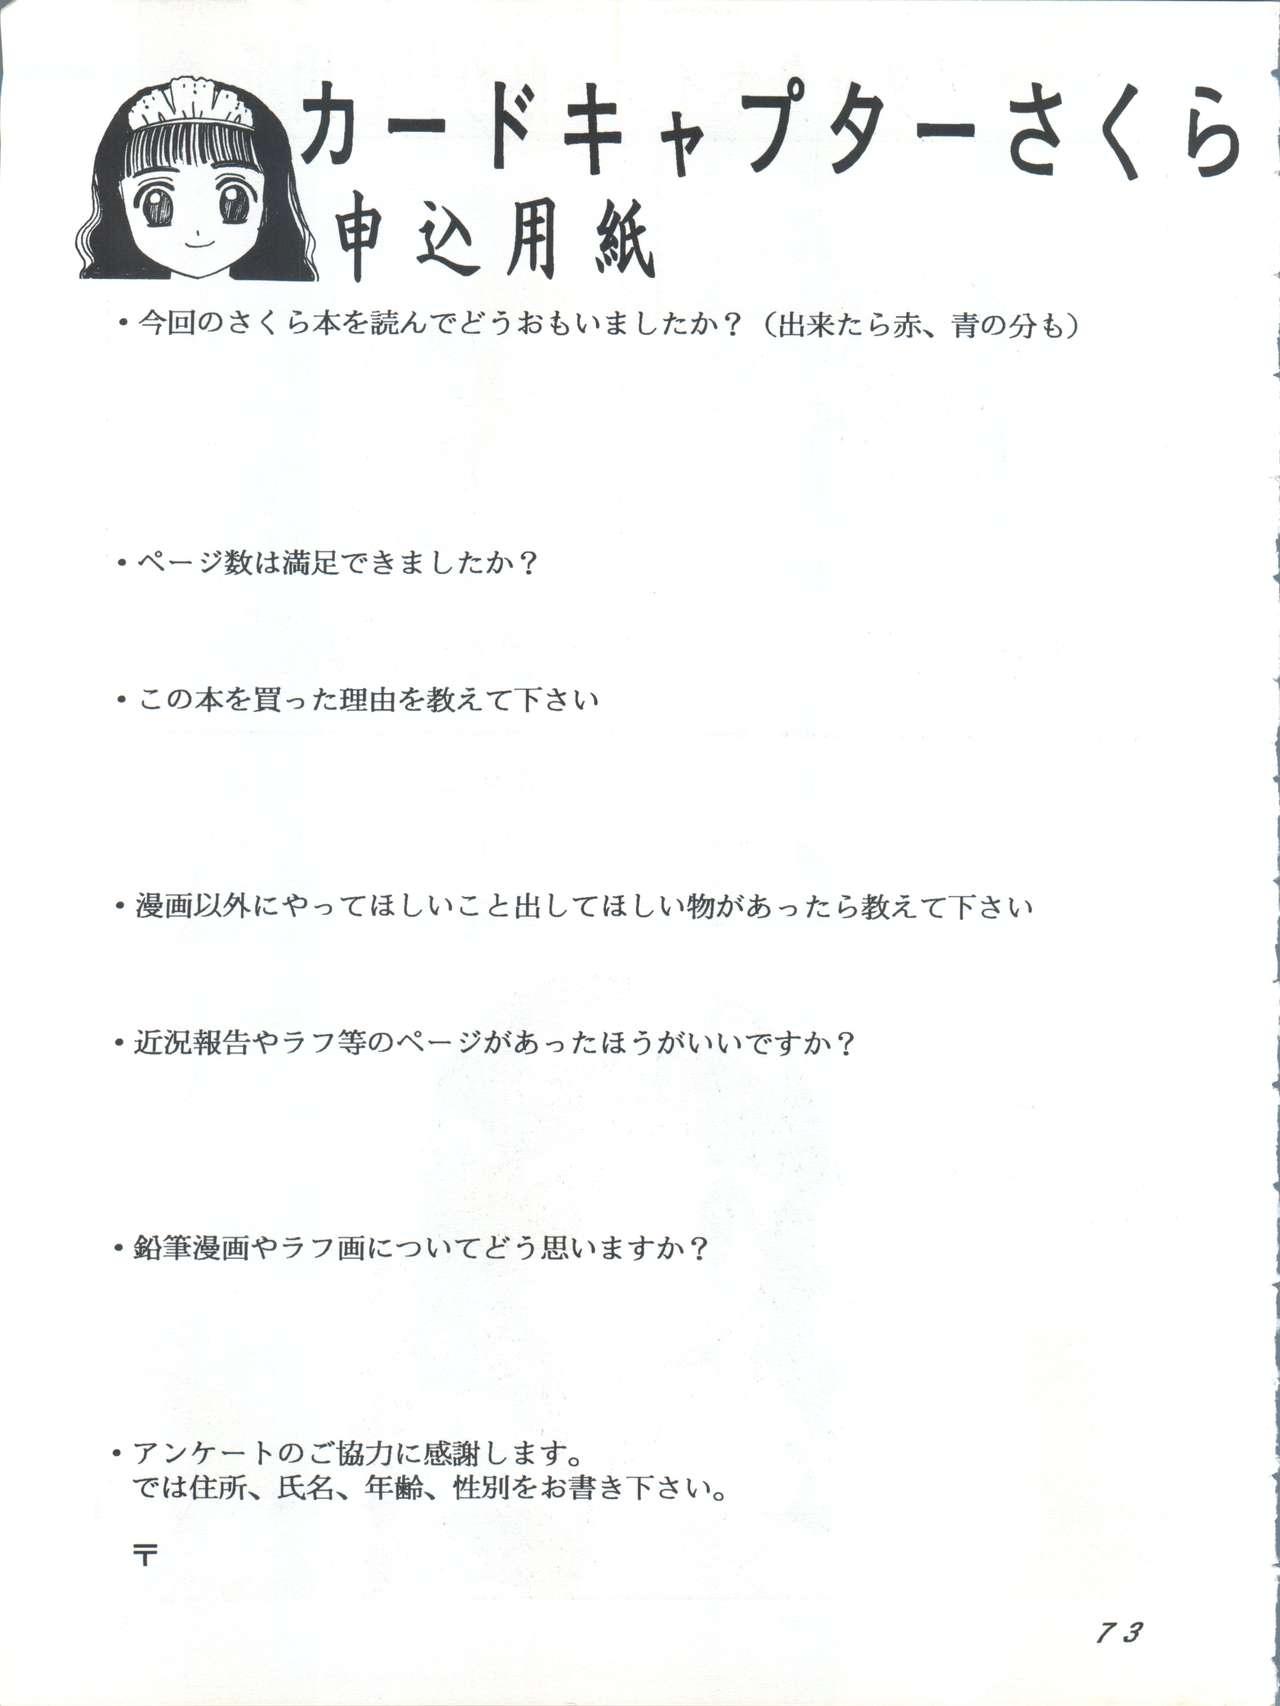 Spank Card Captor Sakura Act 3 Green Version - Cardcaptor sakura Spain - Page 72